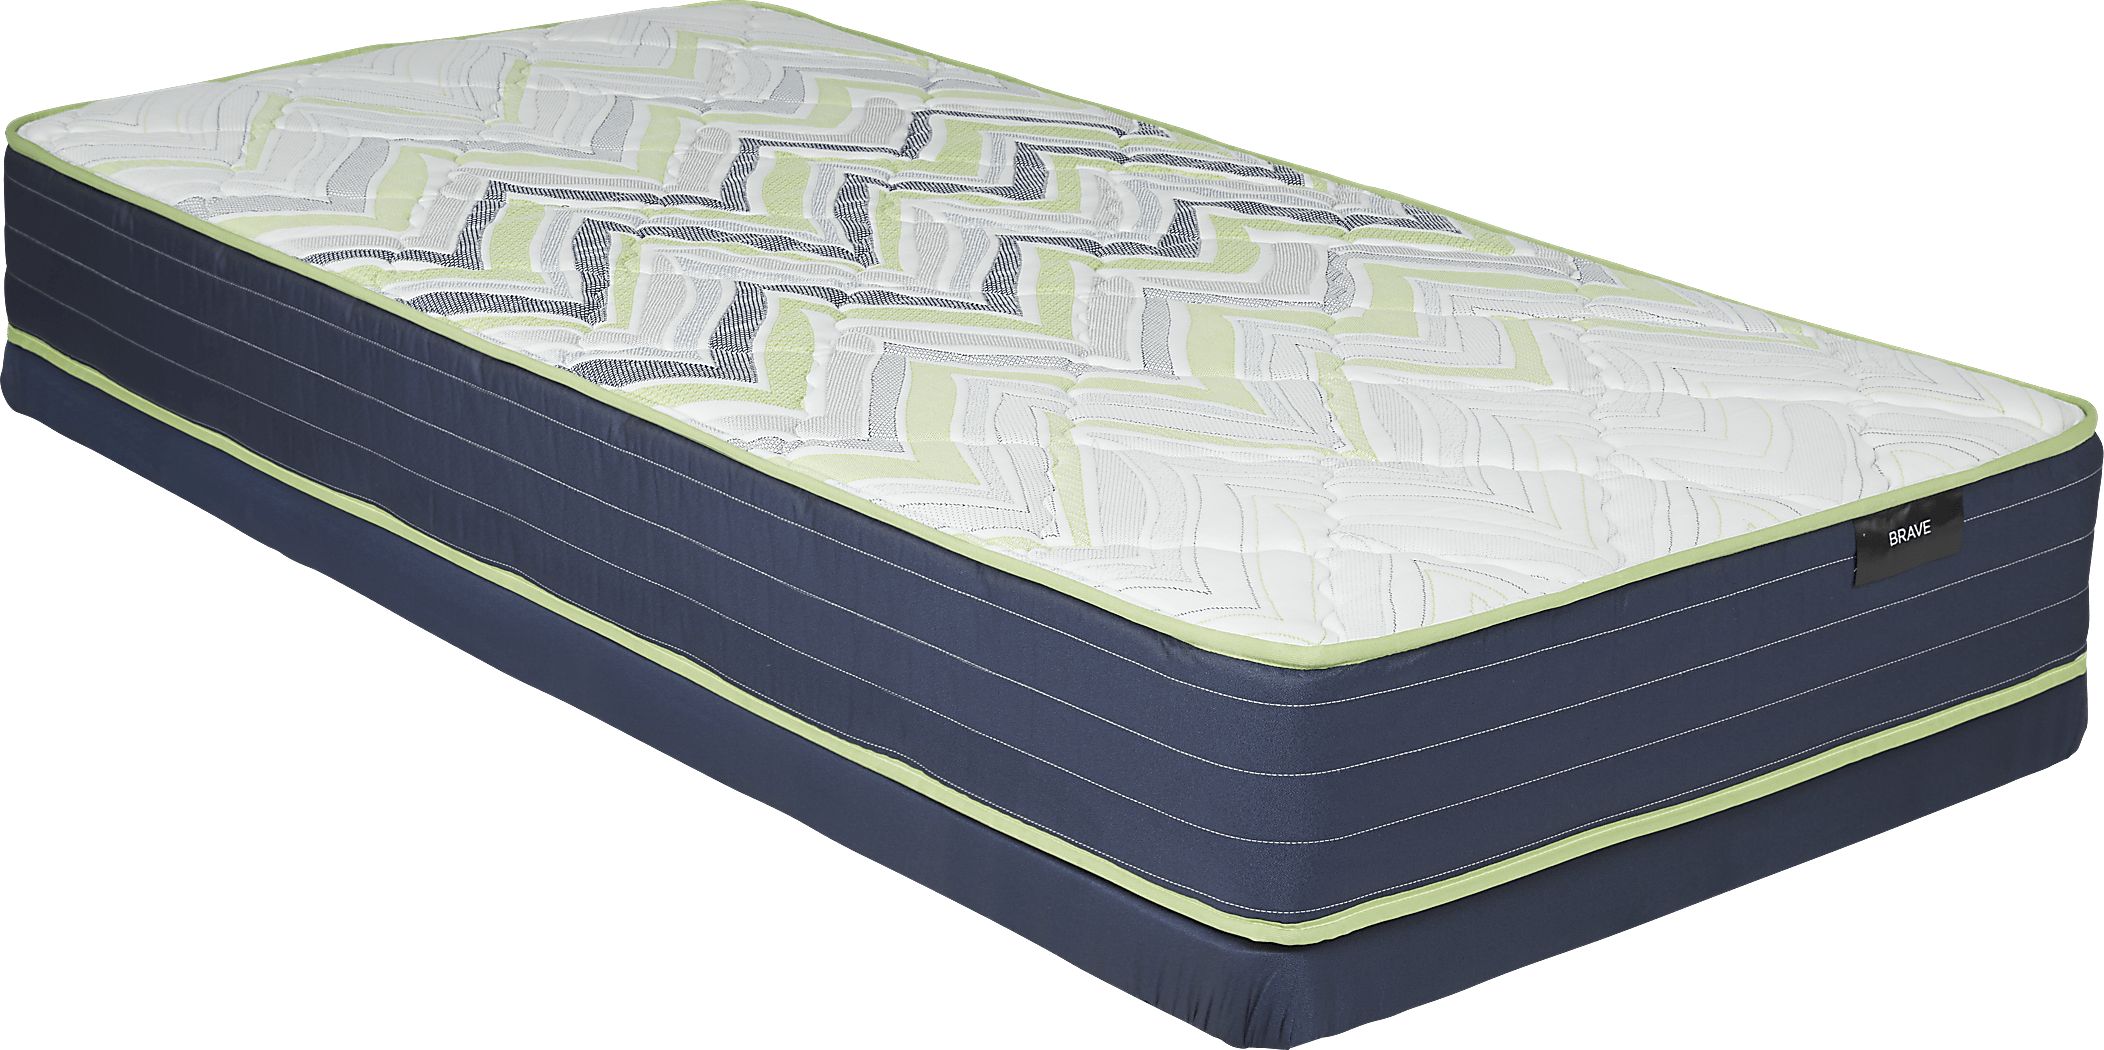 kingsdown sleeping beauty zinfindel mattress